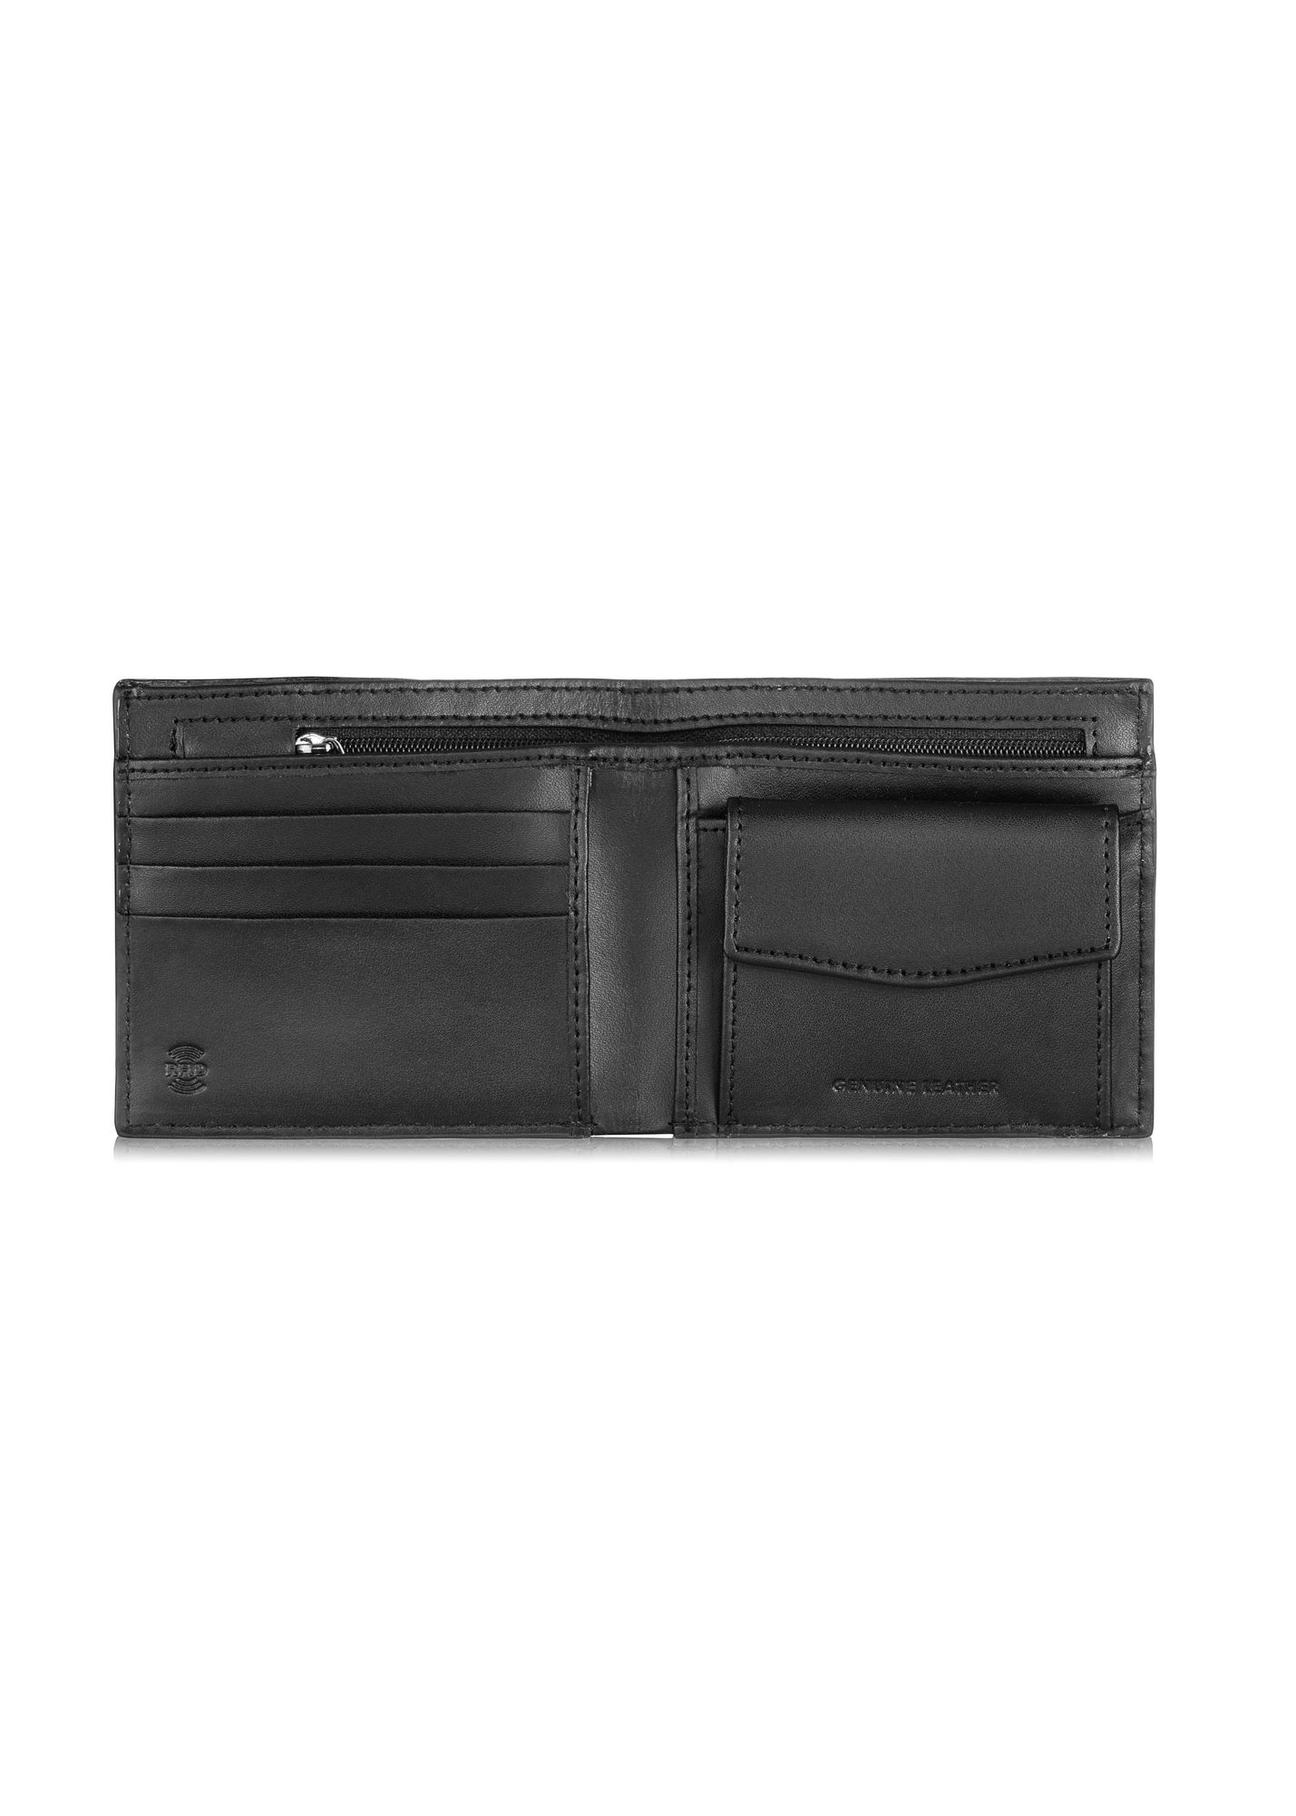 Skórzany portfel męski wzór moro PORMS-0530-99(W23)